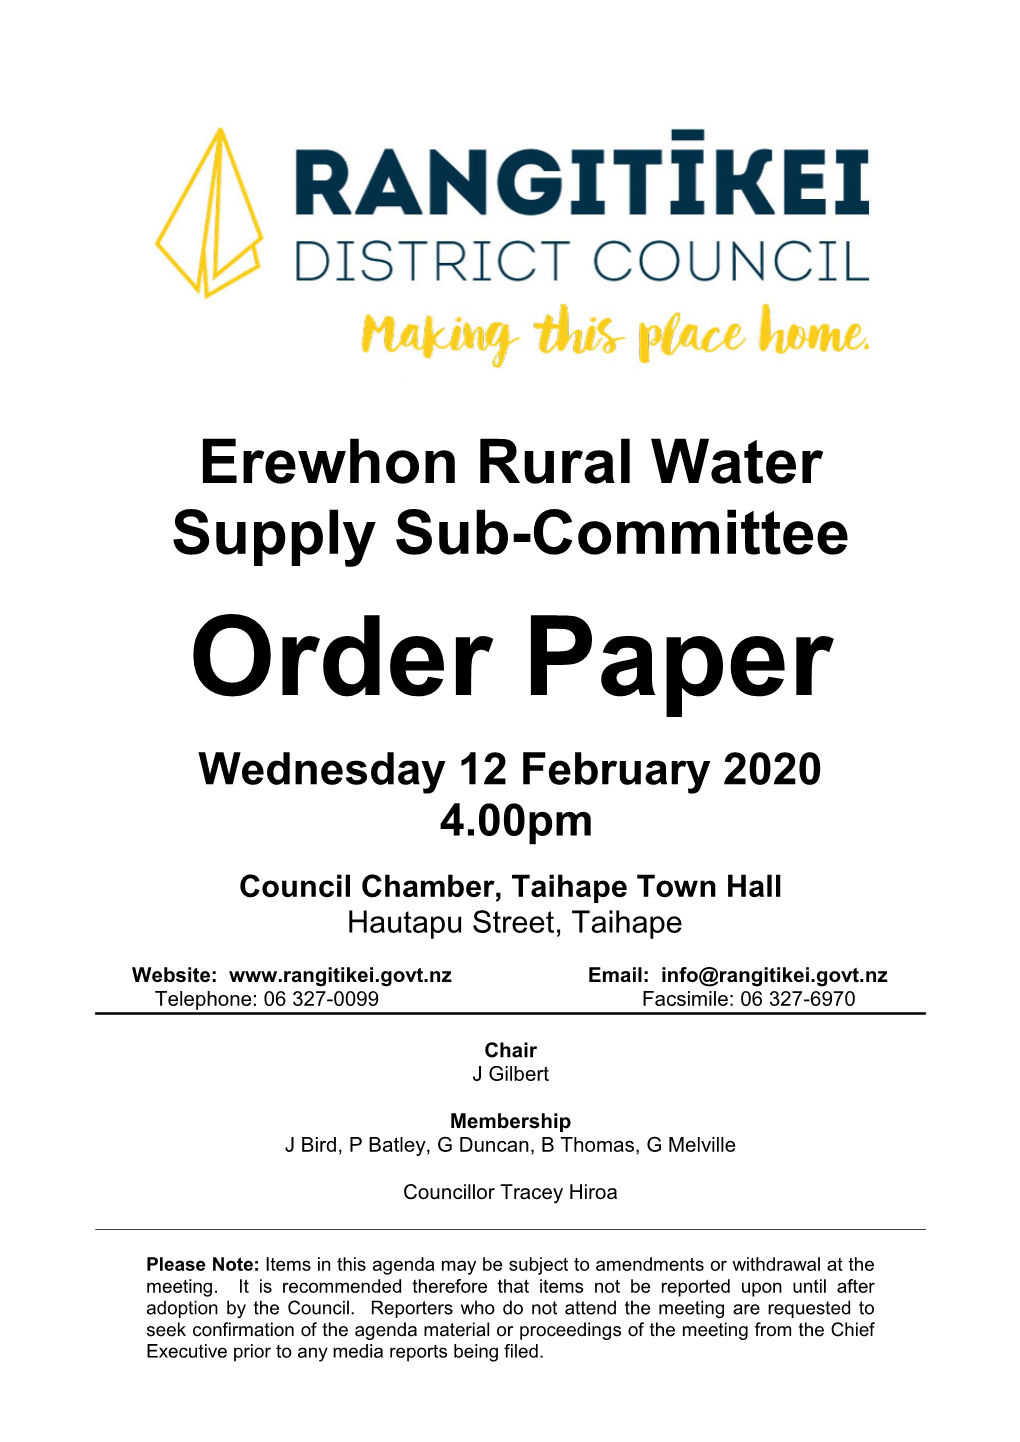 Order Paper Wednesday 12 February 2020 4.00Pm Council Chamber, Taihape Town Hall Hautapu Street, Taihape